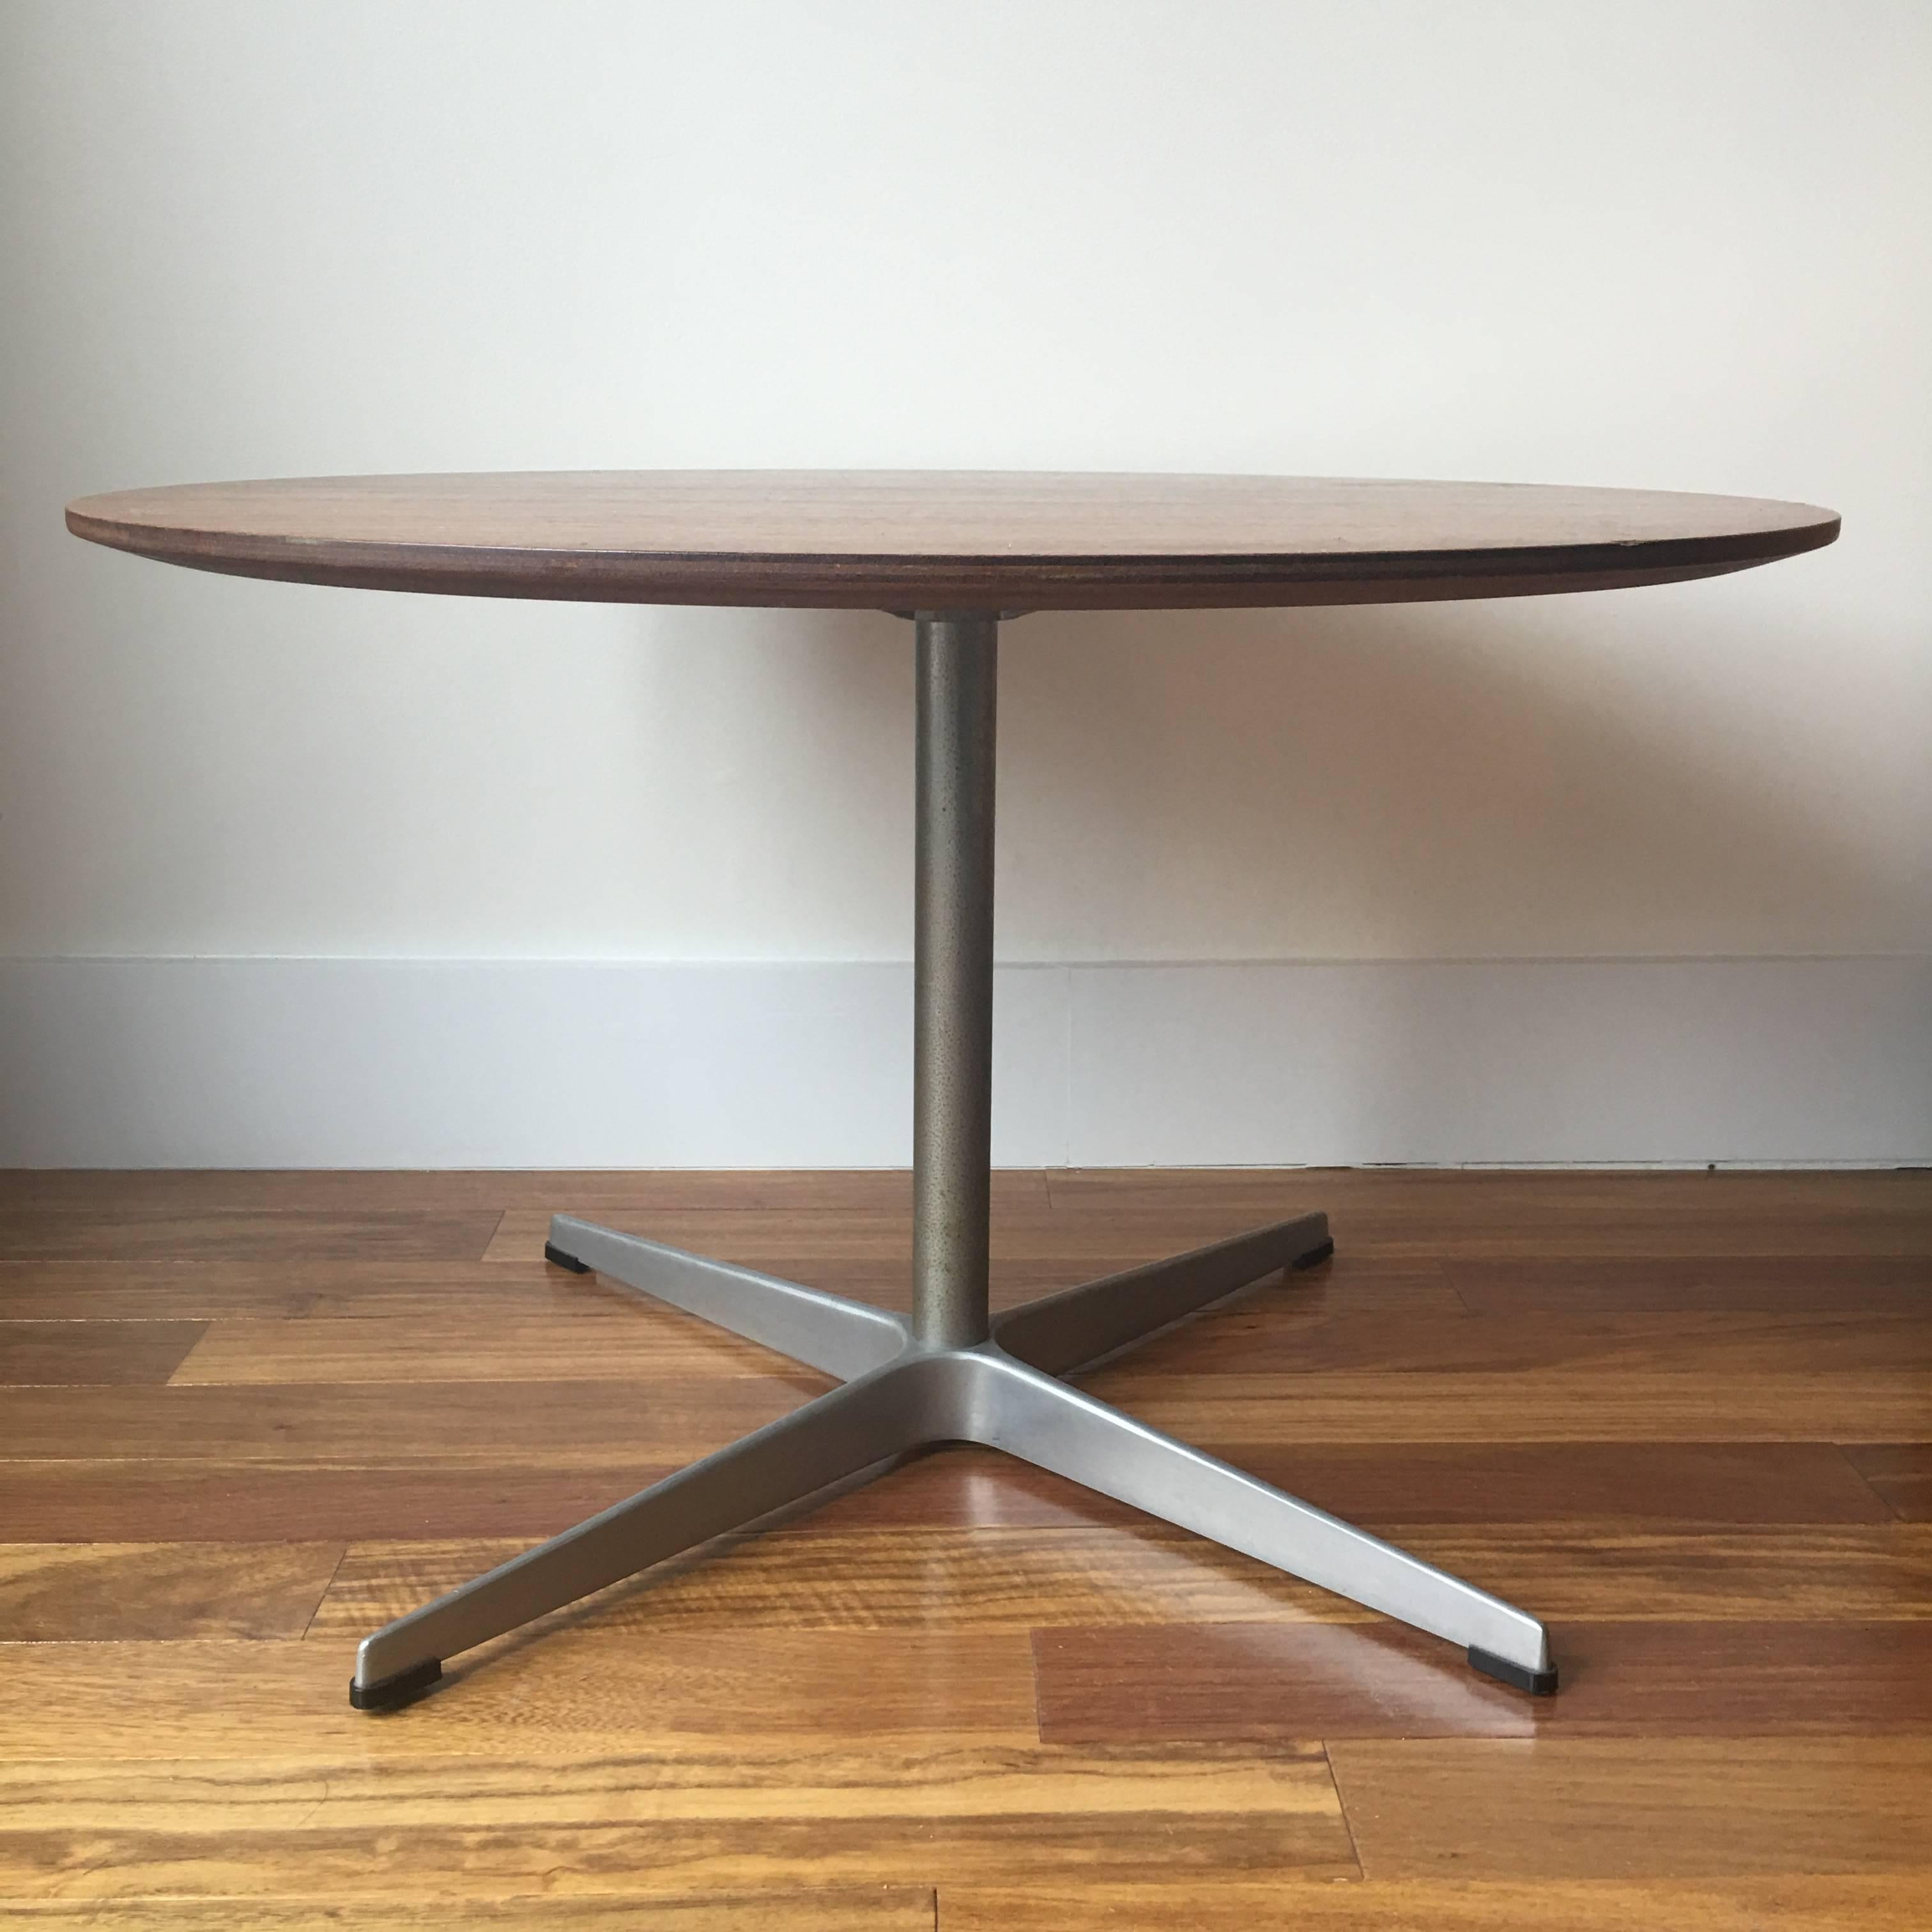 Arne Jacobsen for Fritz Hansen teak coffee table. Four star aluminium base with original glides. Signed.